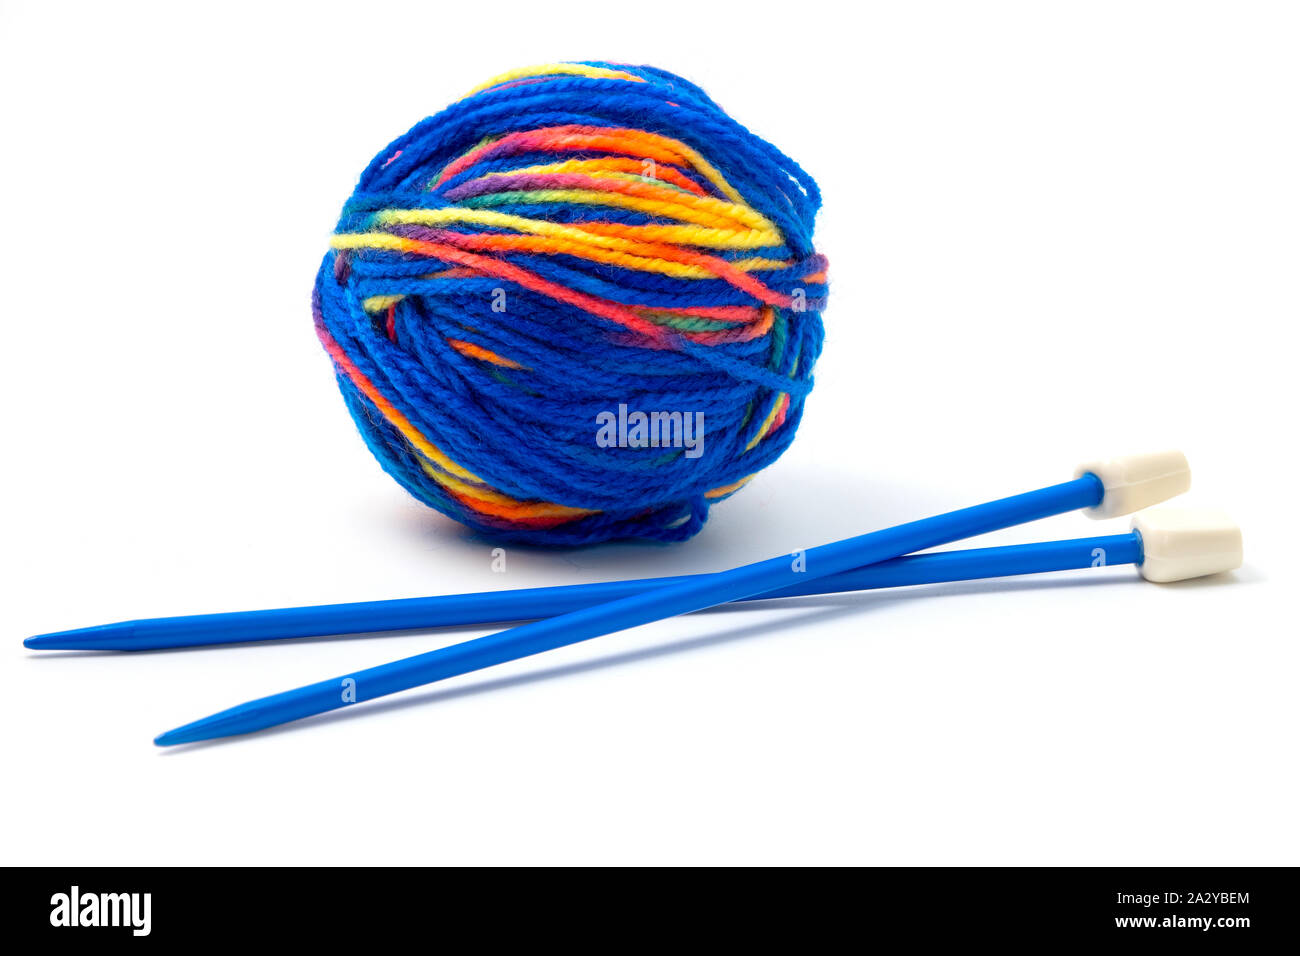 Knitting needles and yarn on a white background Stock Photo